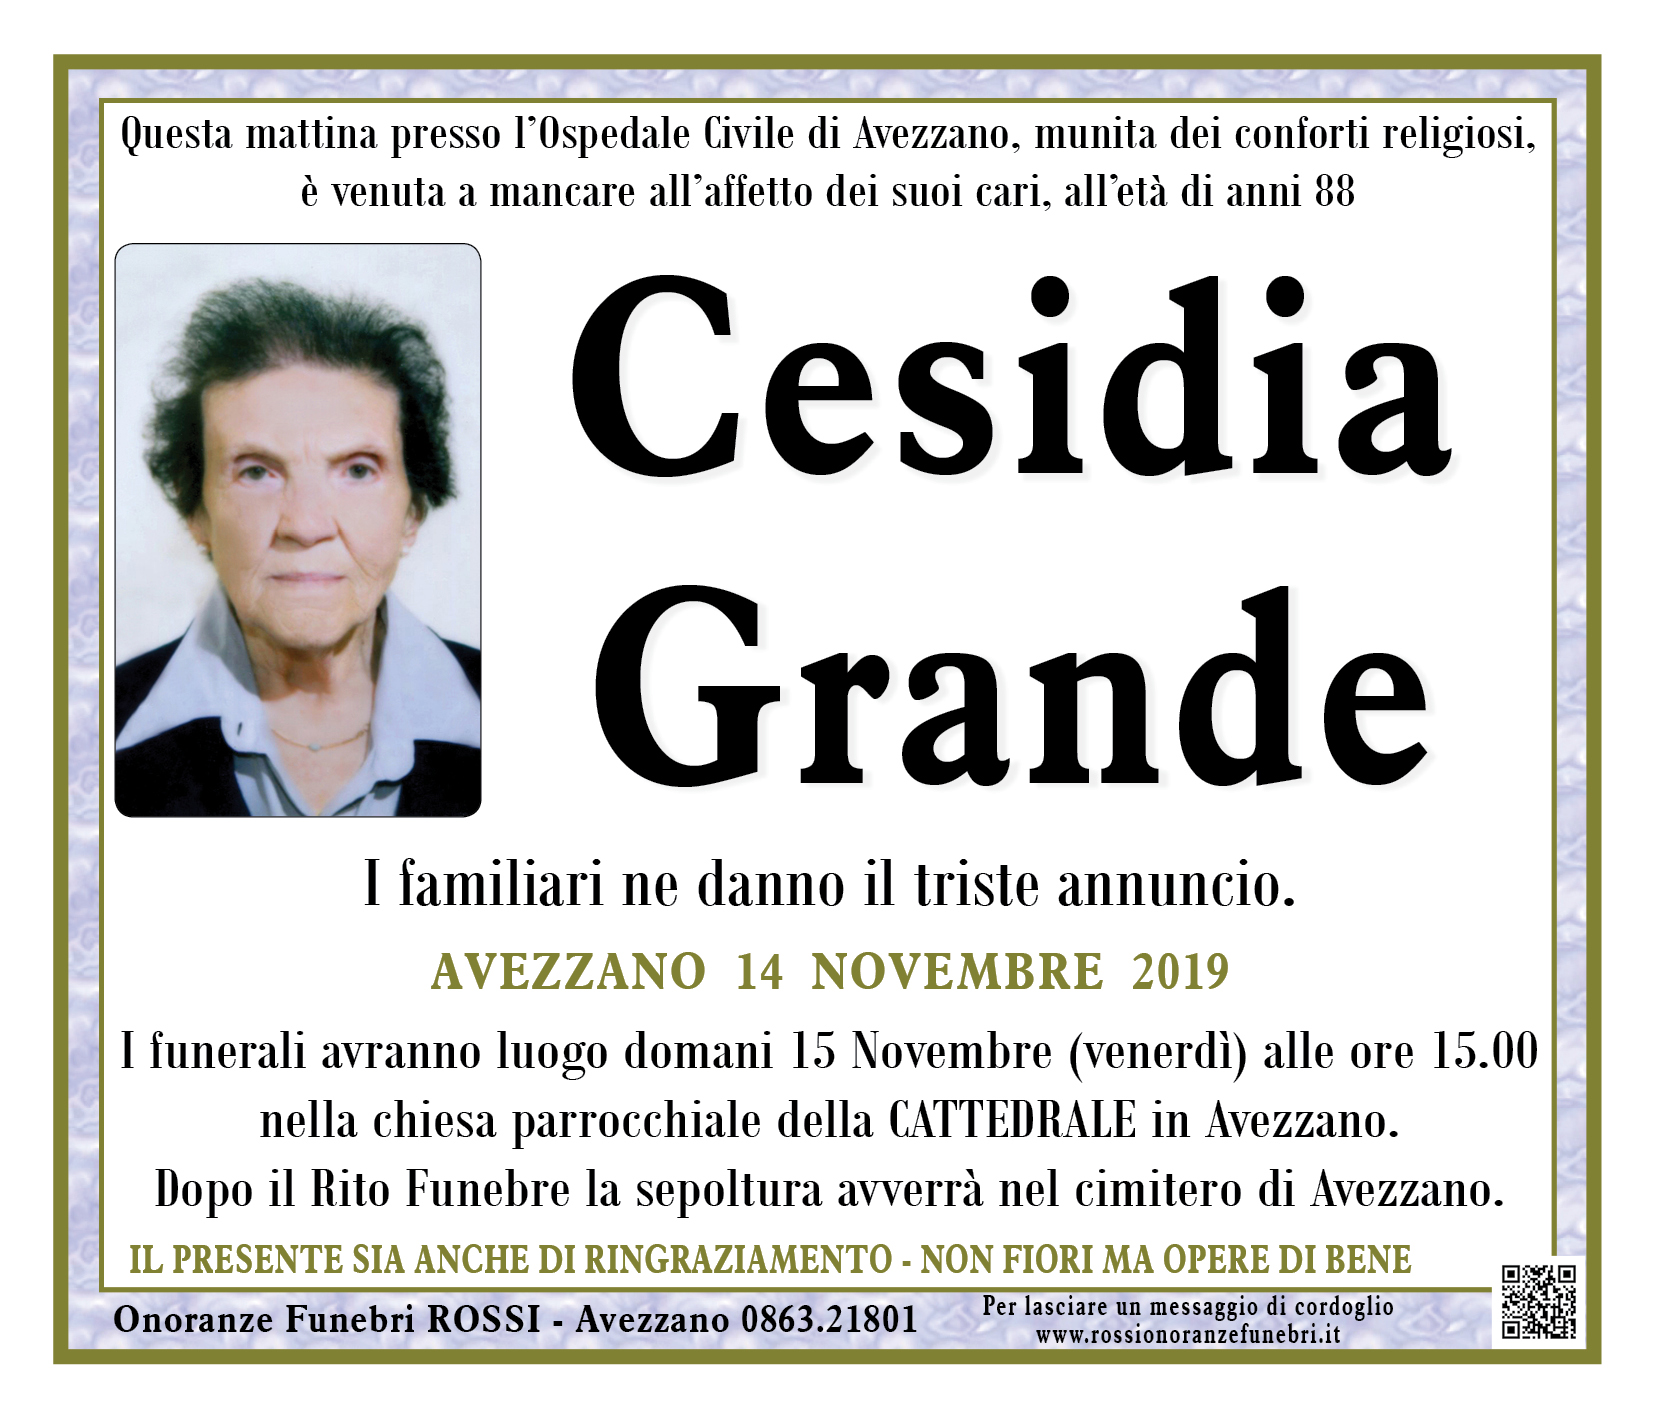 Cesidia Grande